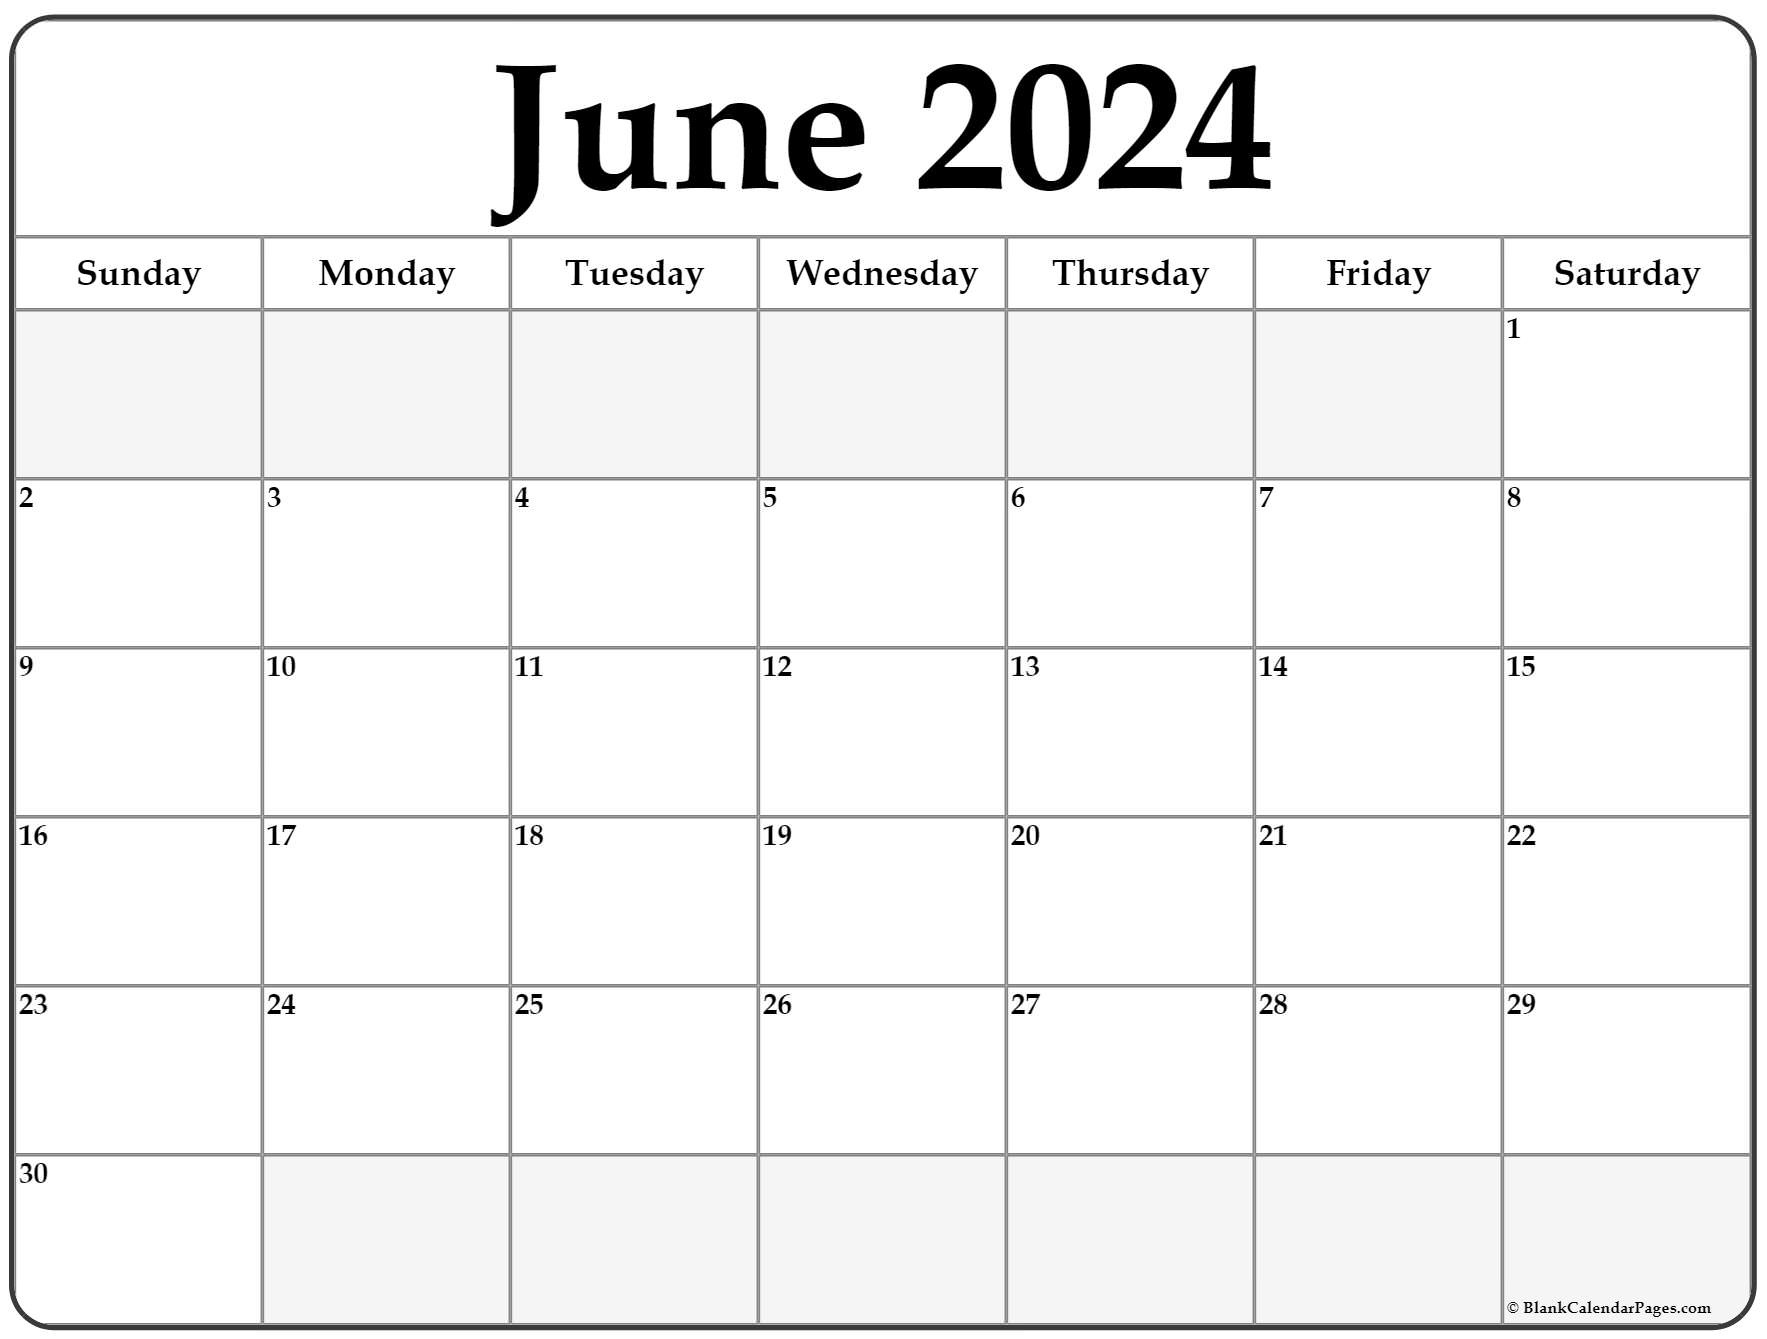 June 2024 Calendar | Free Printable Calendar within Calendar June 2024 Malaysia